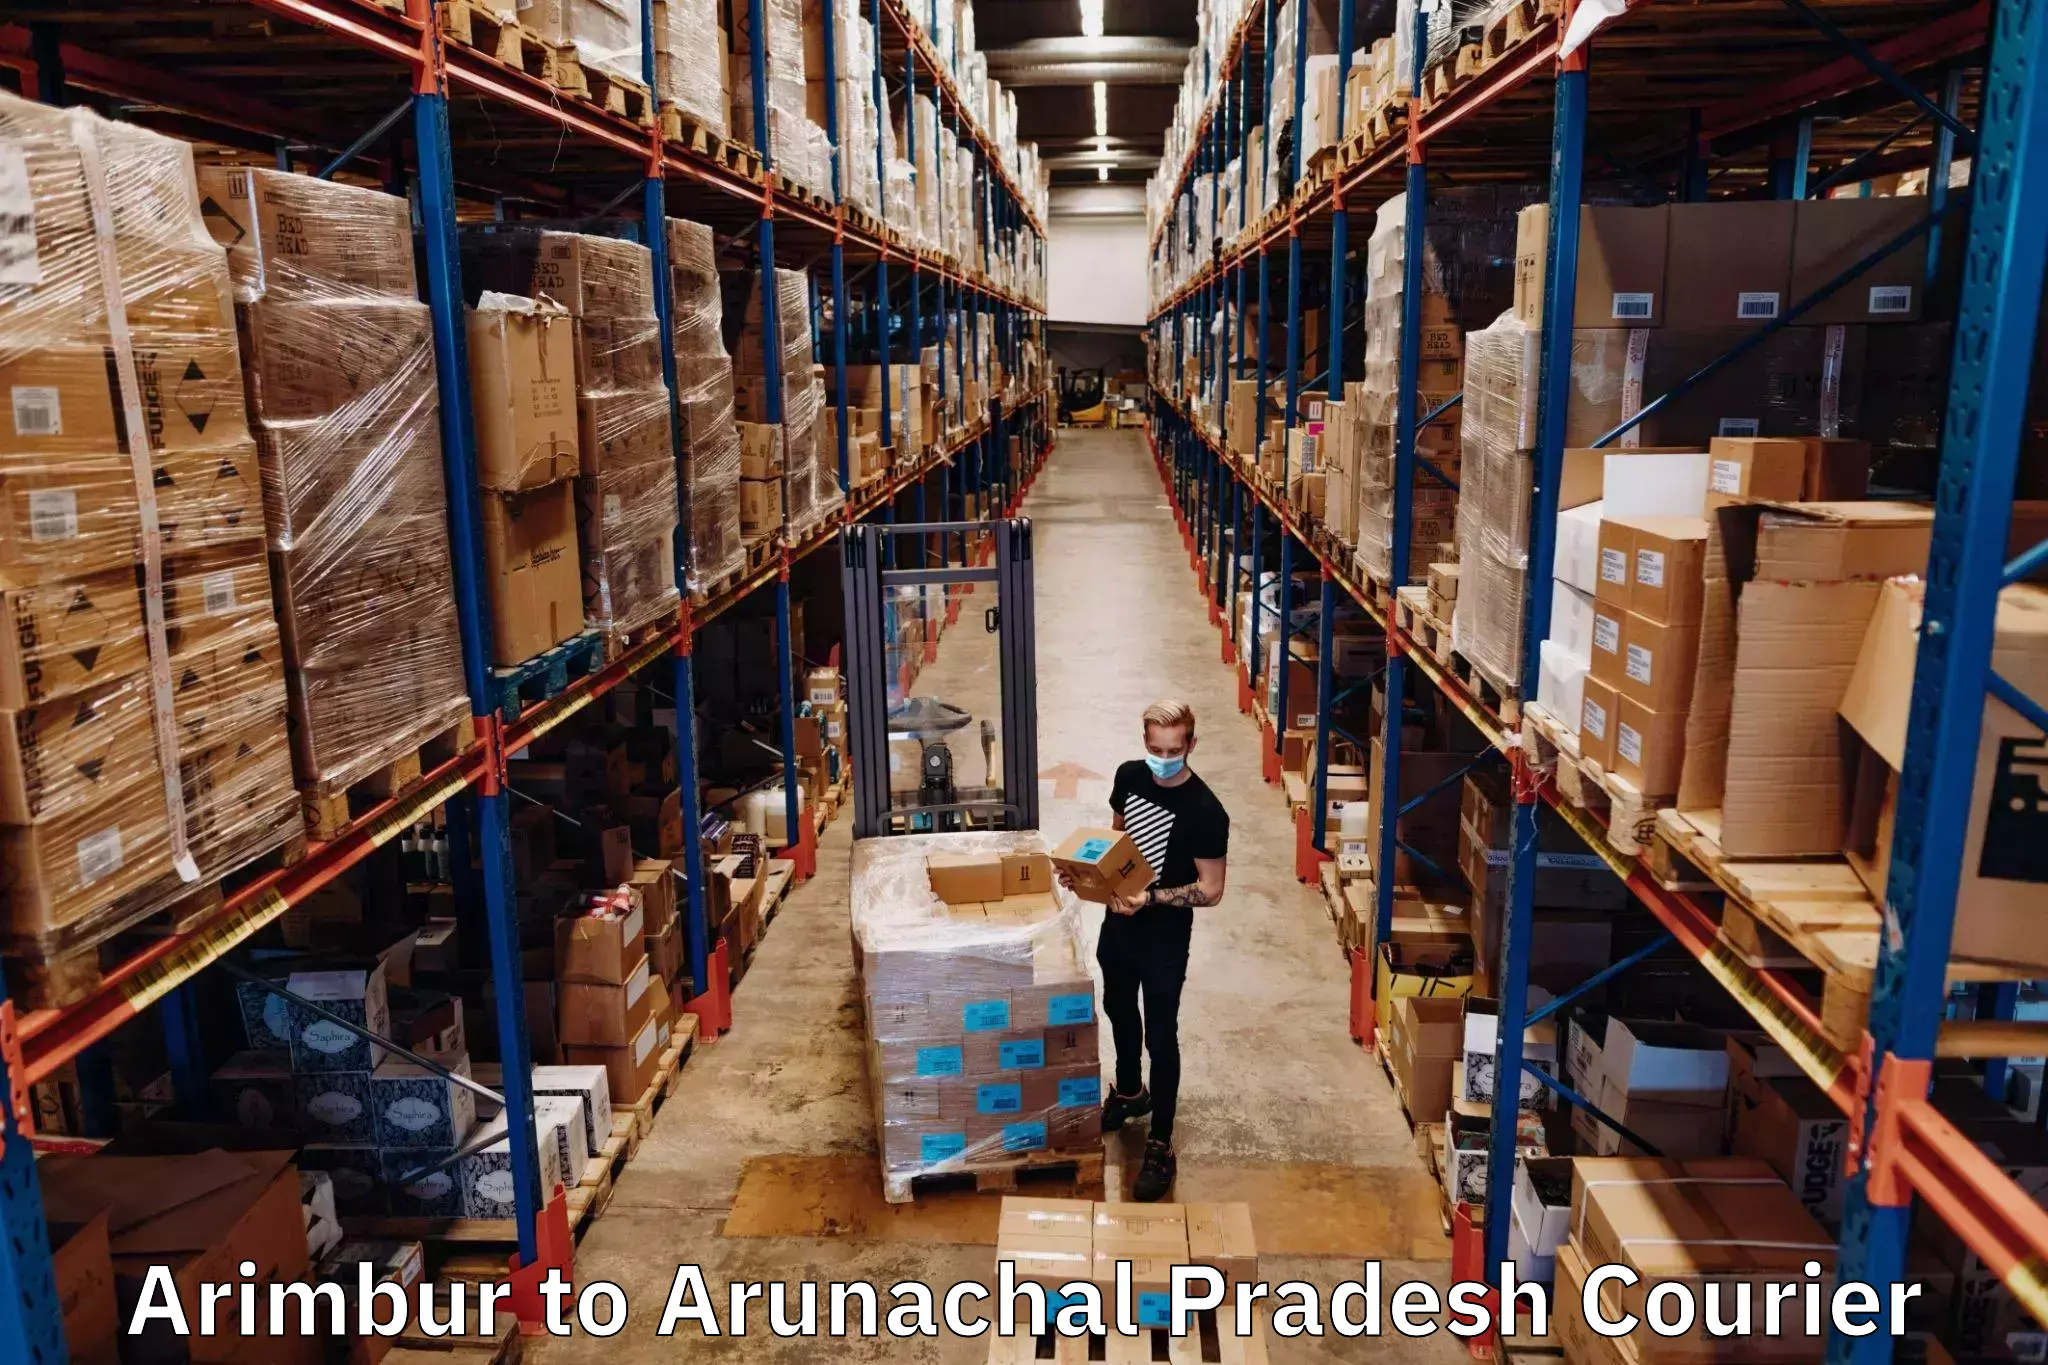 Courier service partnerships in Arimbur to Arunachal Pradesh